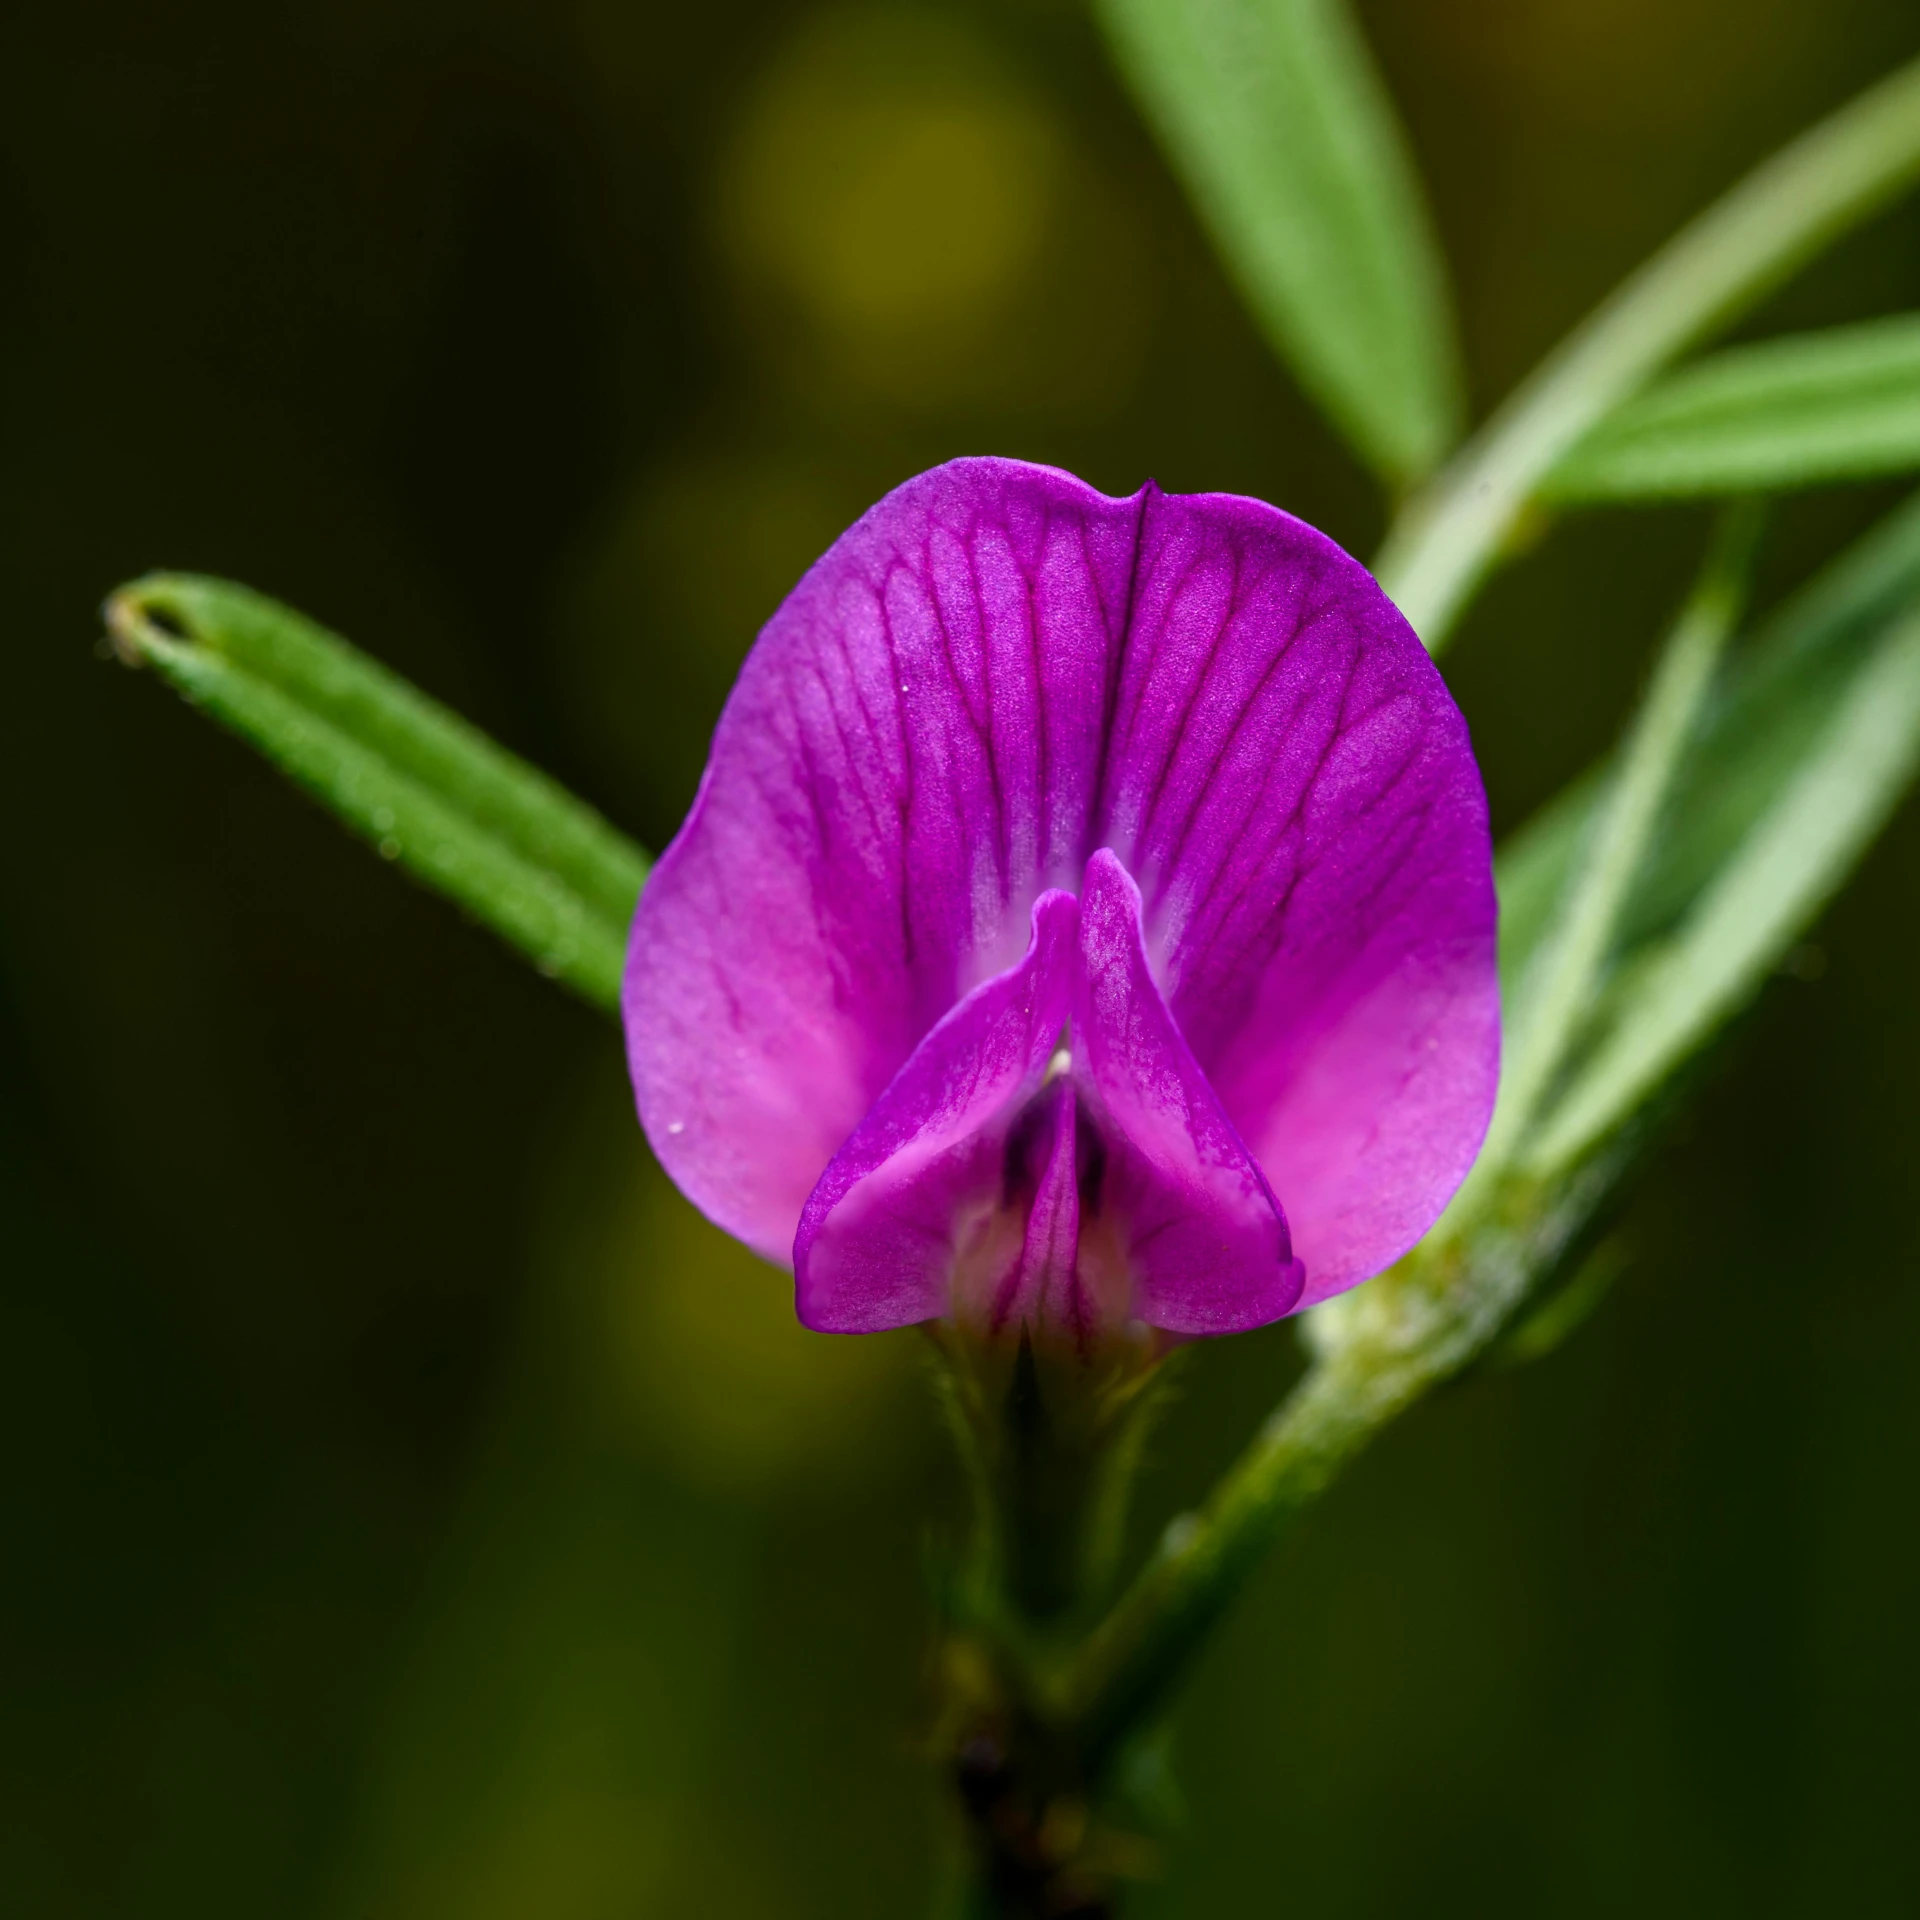 a single purple flower sitting on top of a green stem